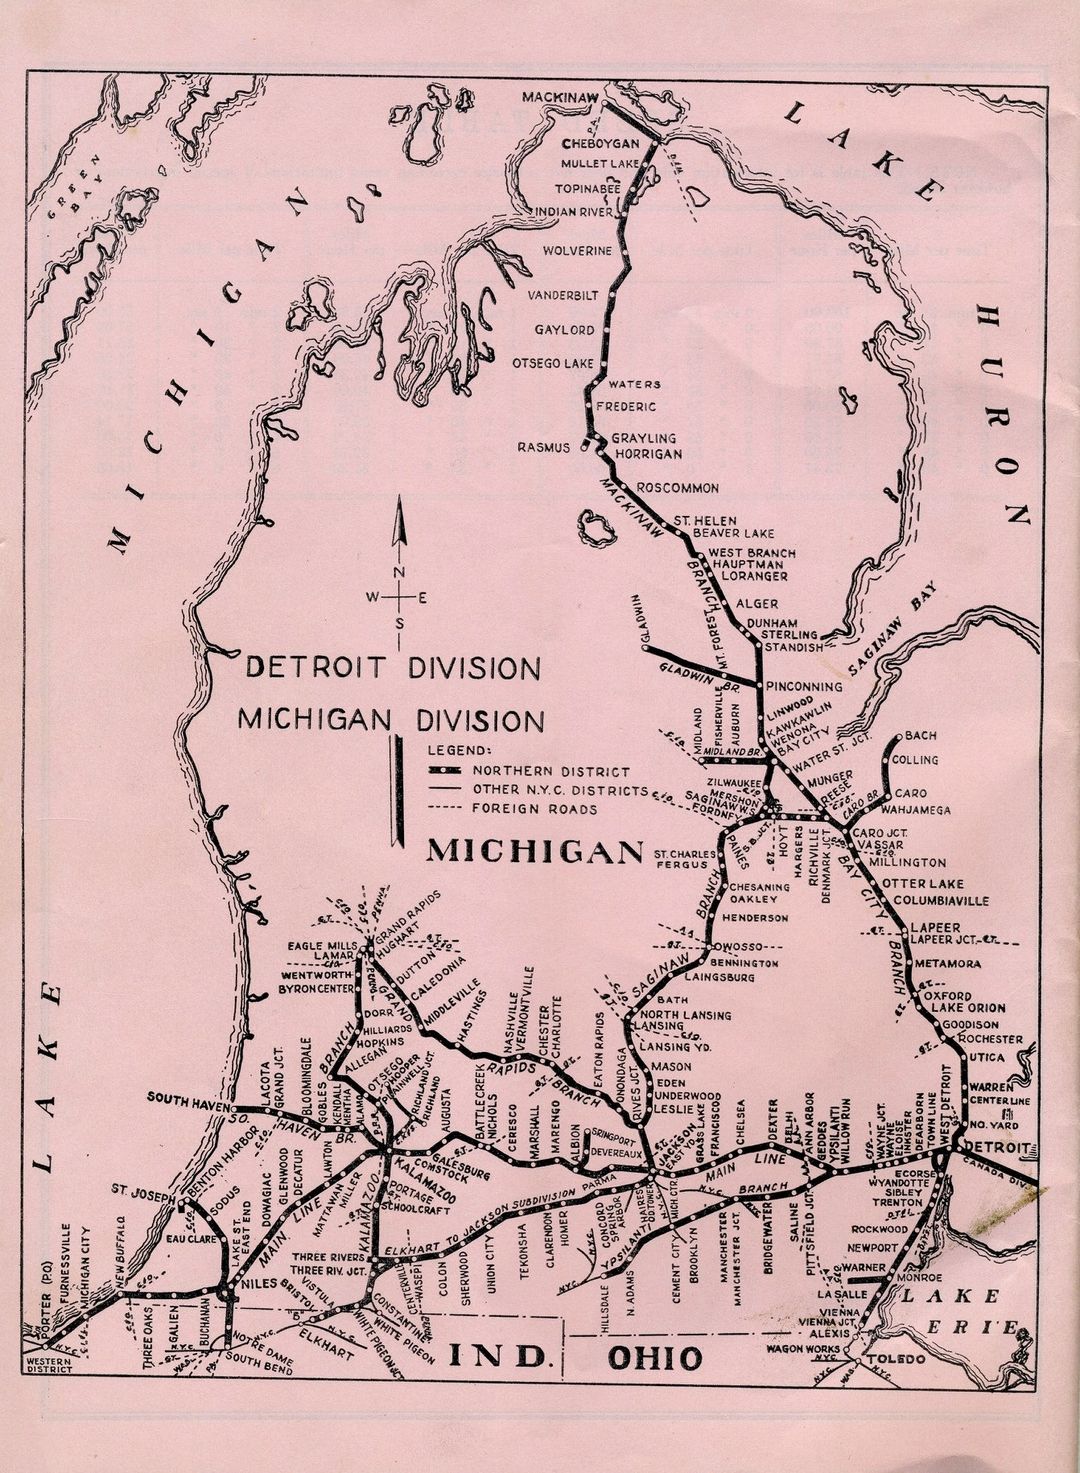 New York Central railroad map in Michigan in 1958